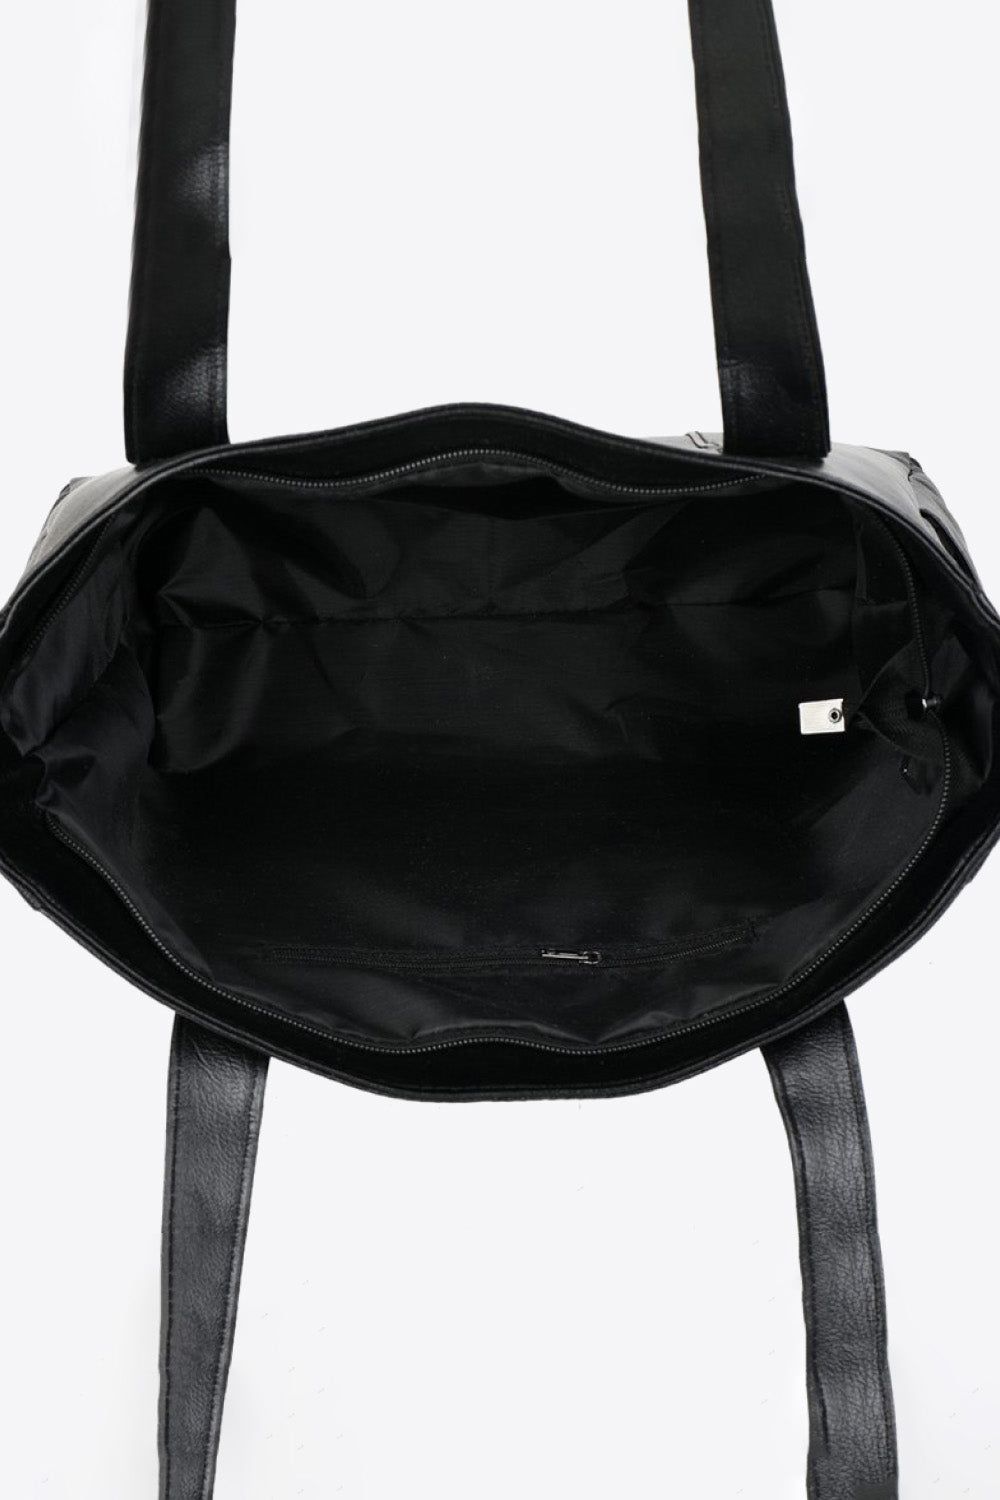 PU Leather Tote Bag.